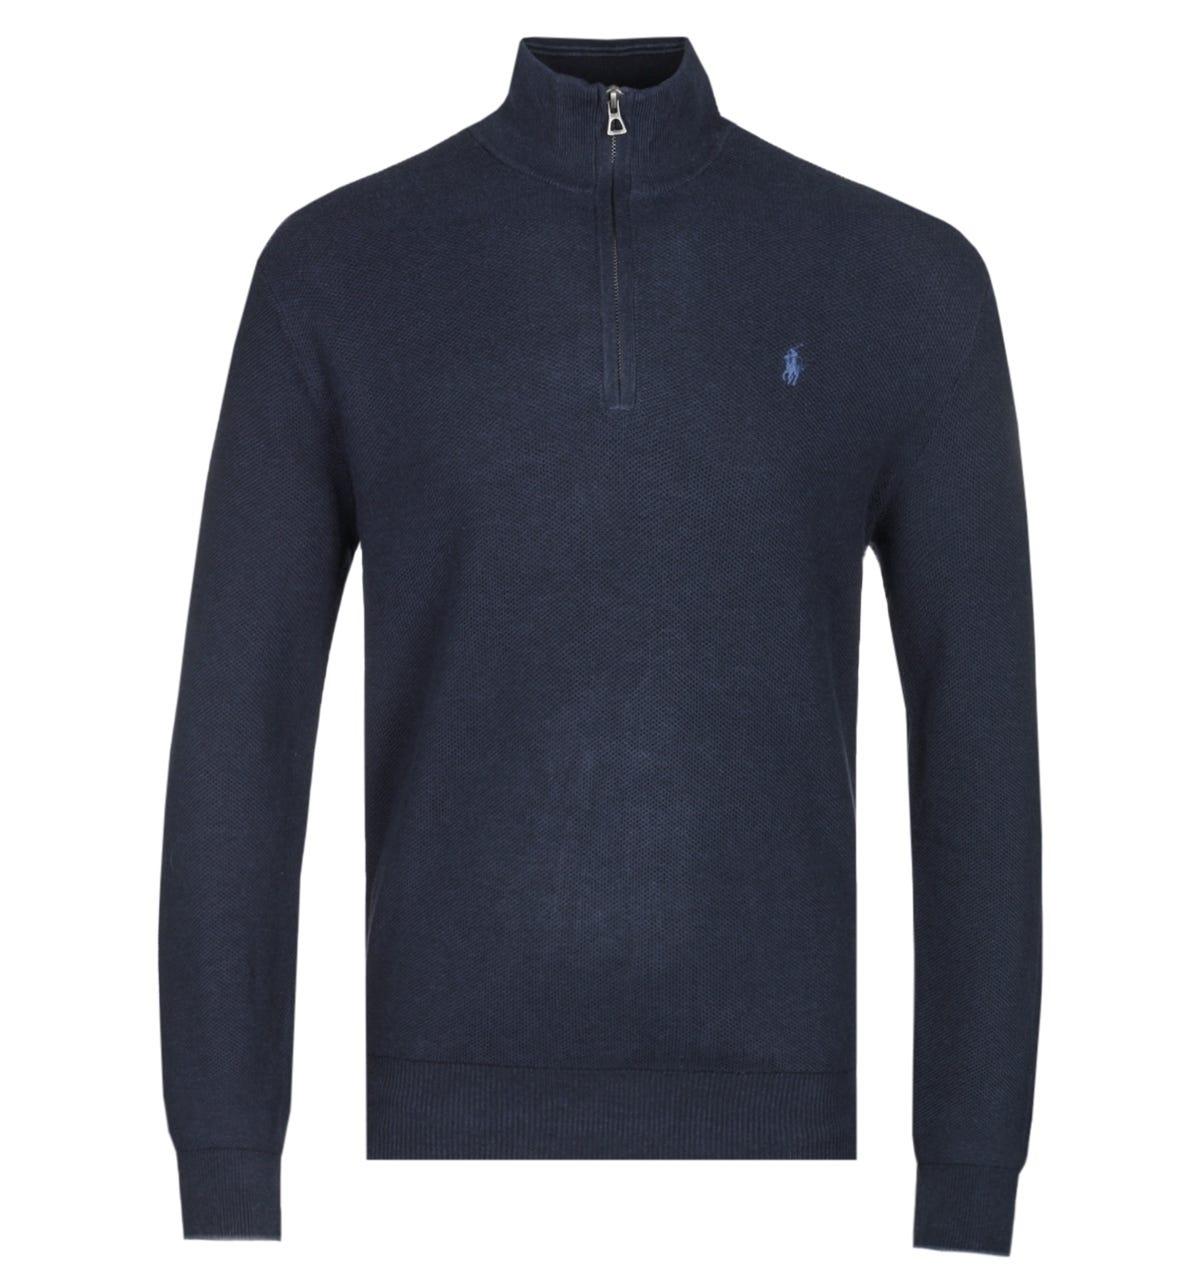 Polo Ralph Lauren Navy Zip Neck Pima Cotton Sweater in Blue for Men - Lyst